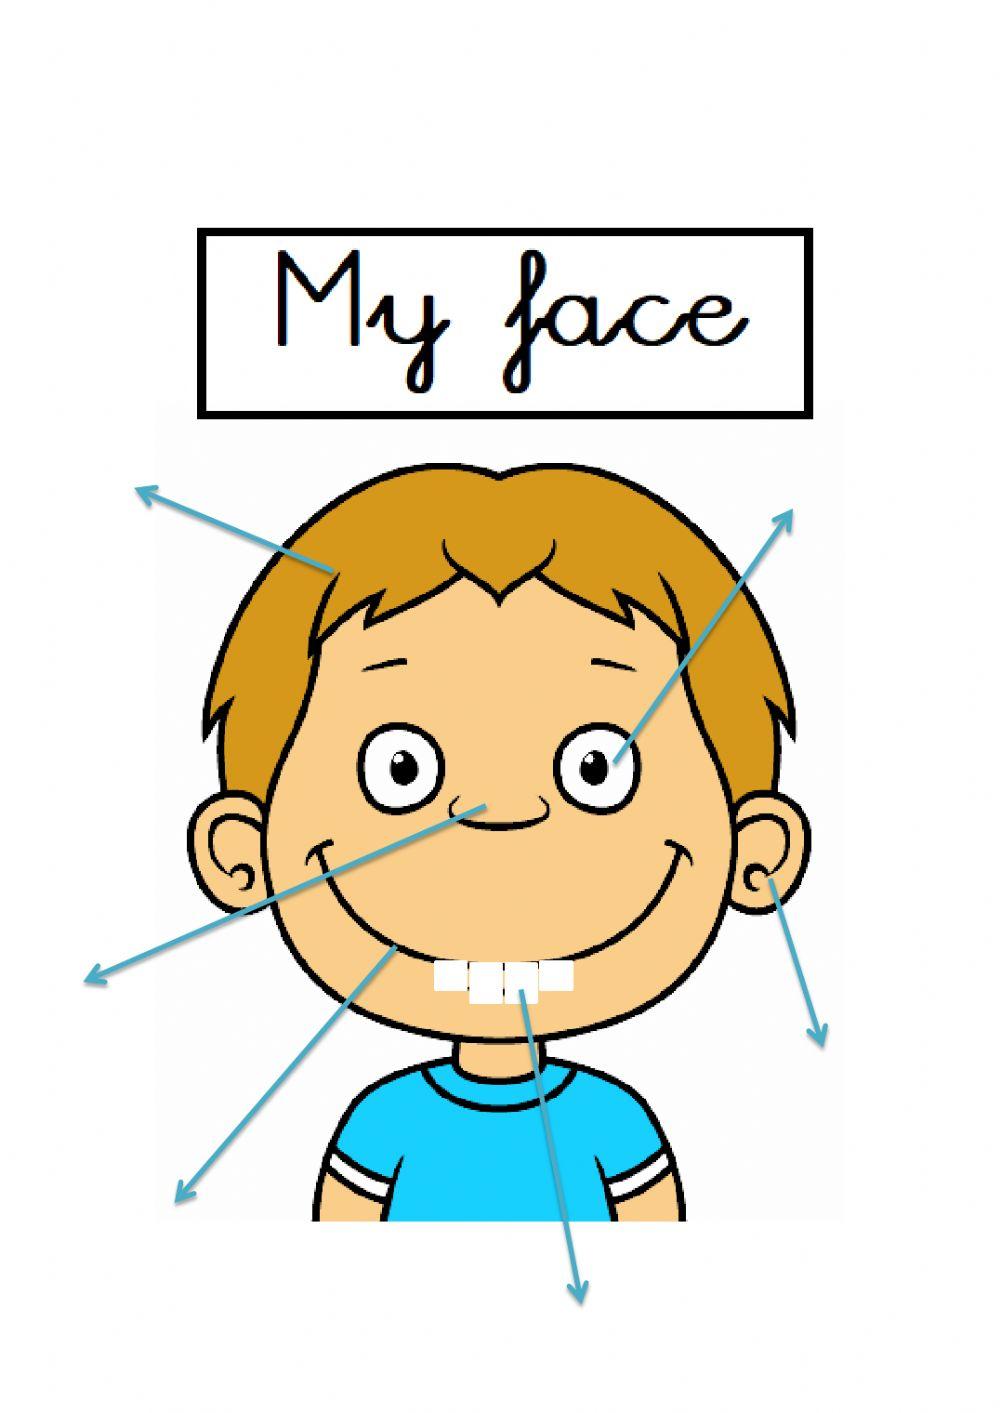 My face - 2nd grade